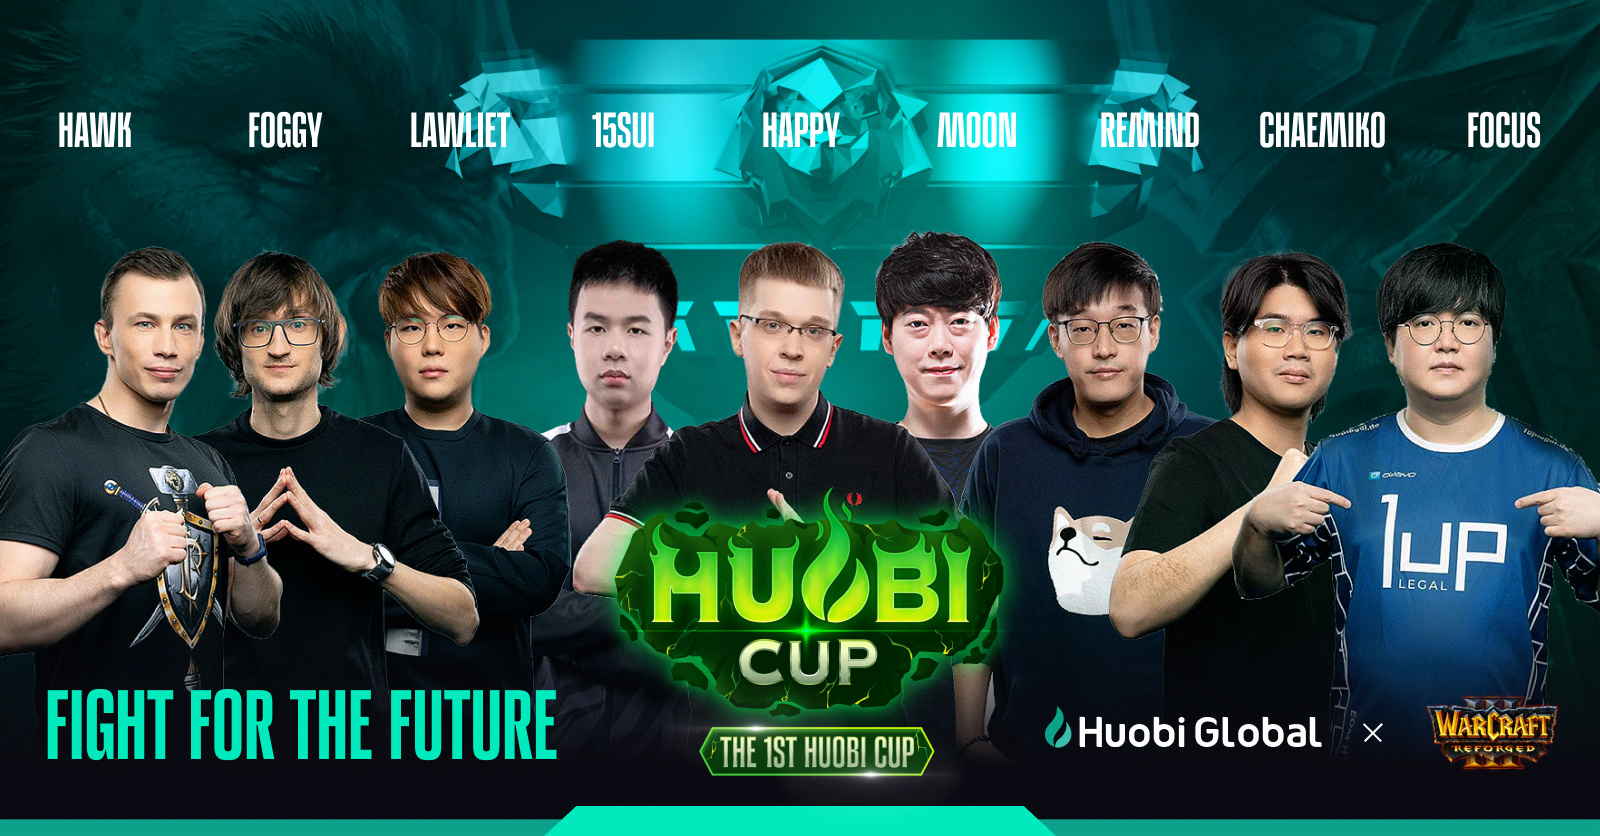 Huobi Cup